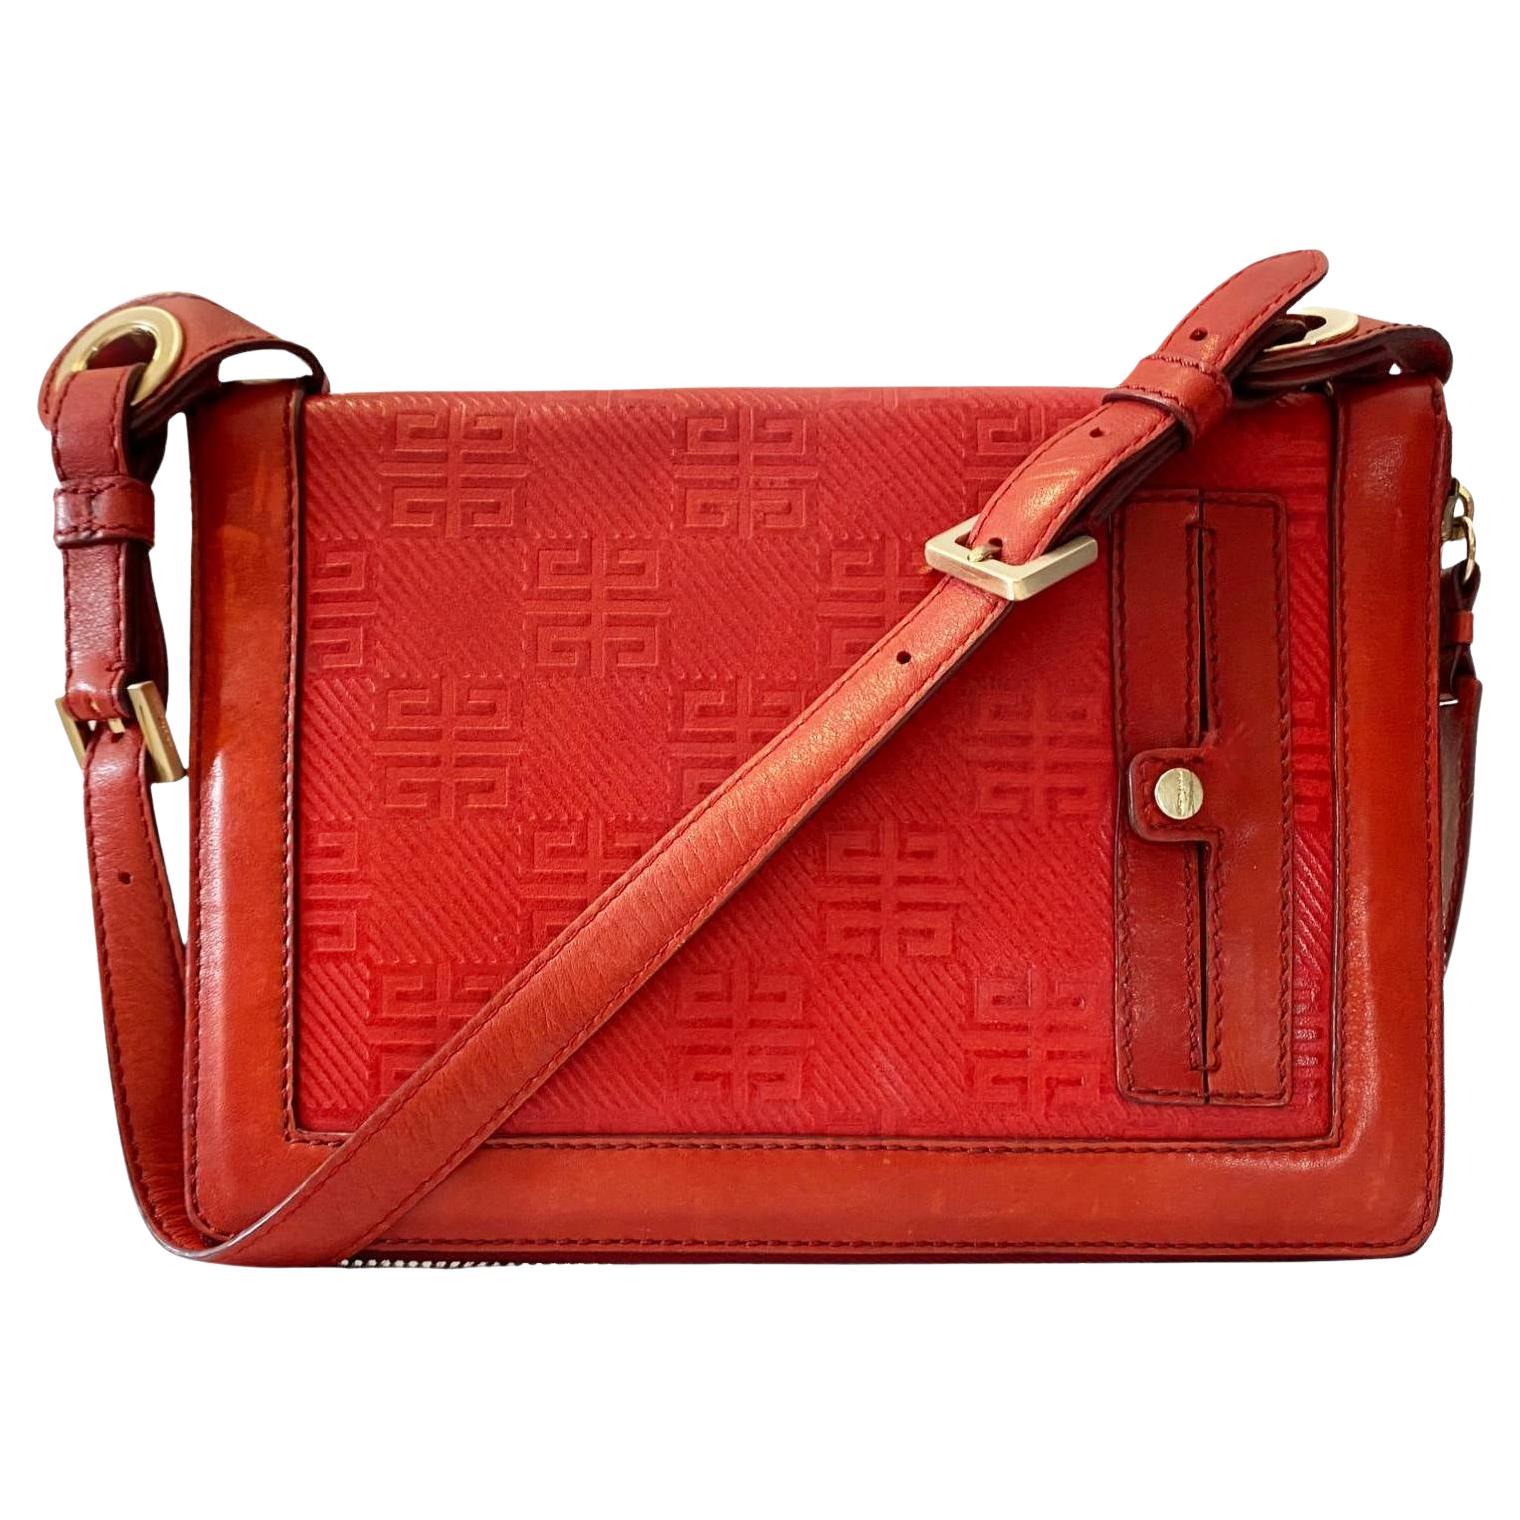 Burgundy Leather Bag - 470 For Sale on 1stDibs